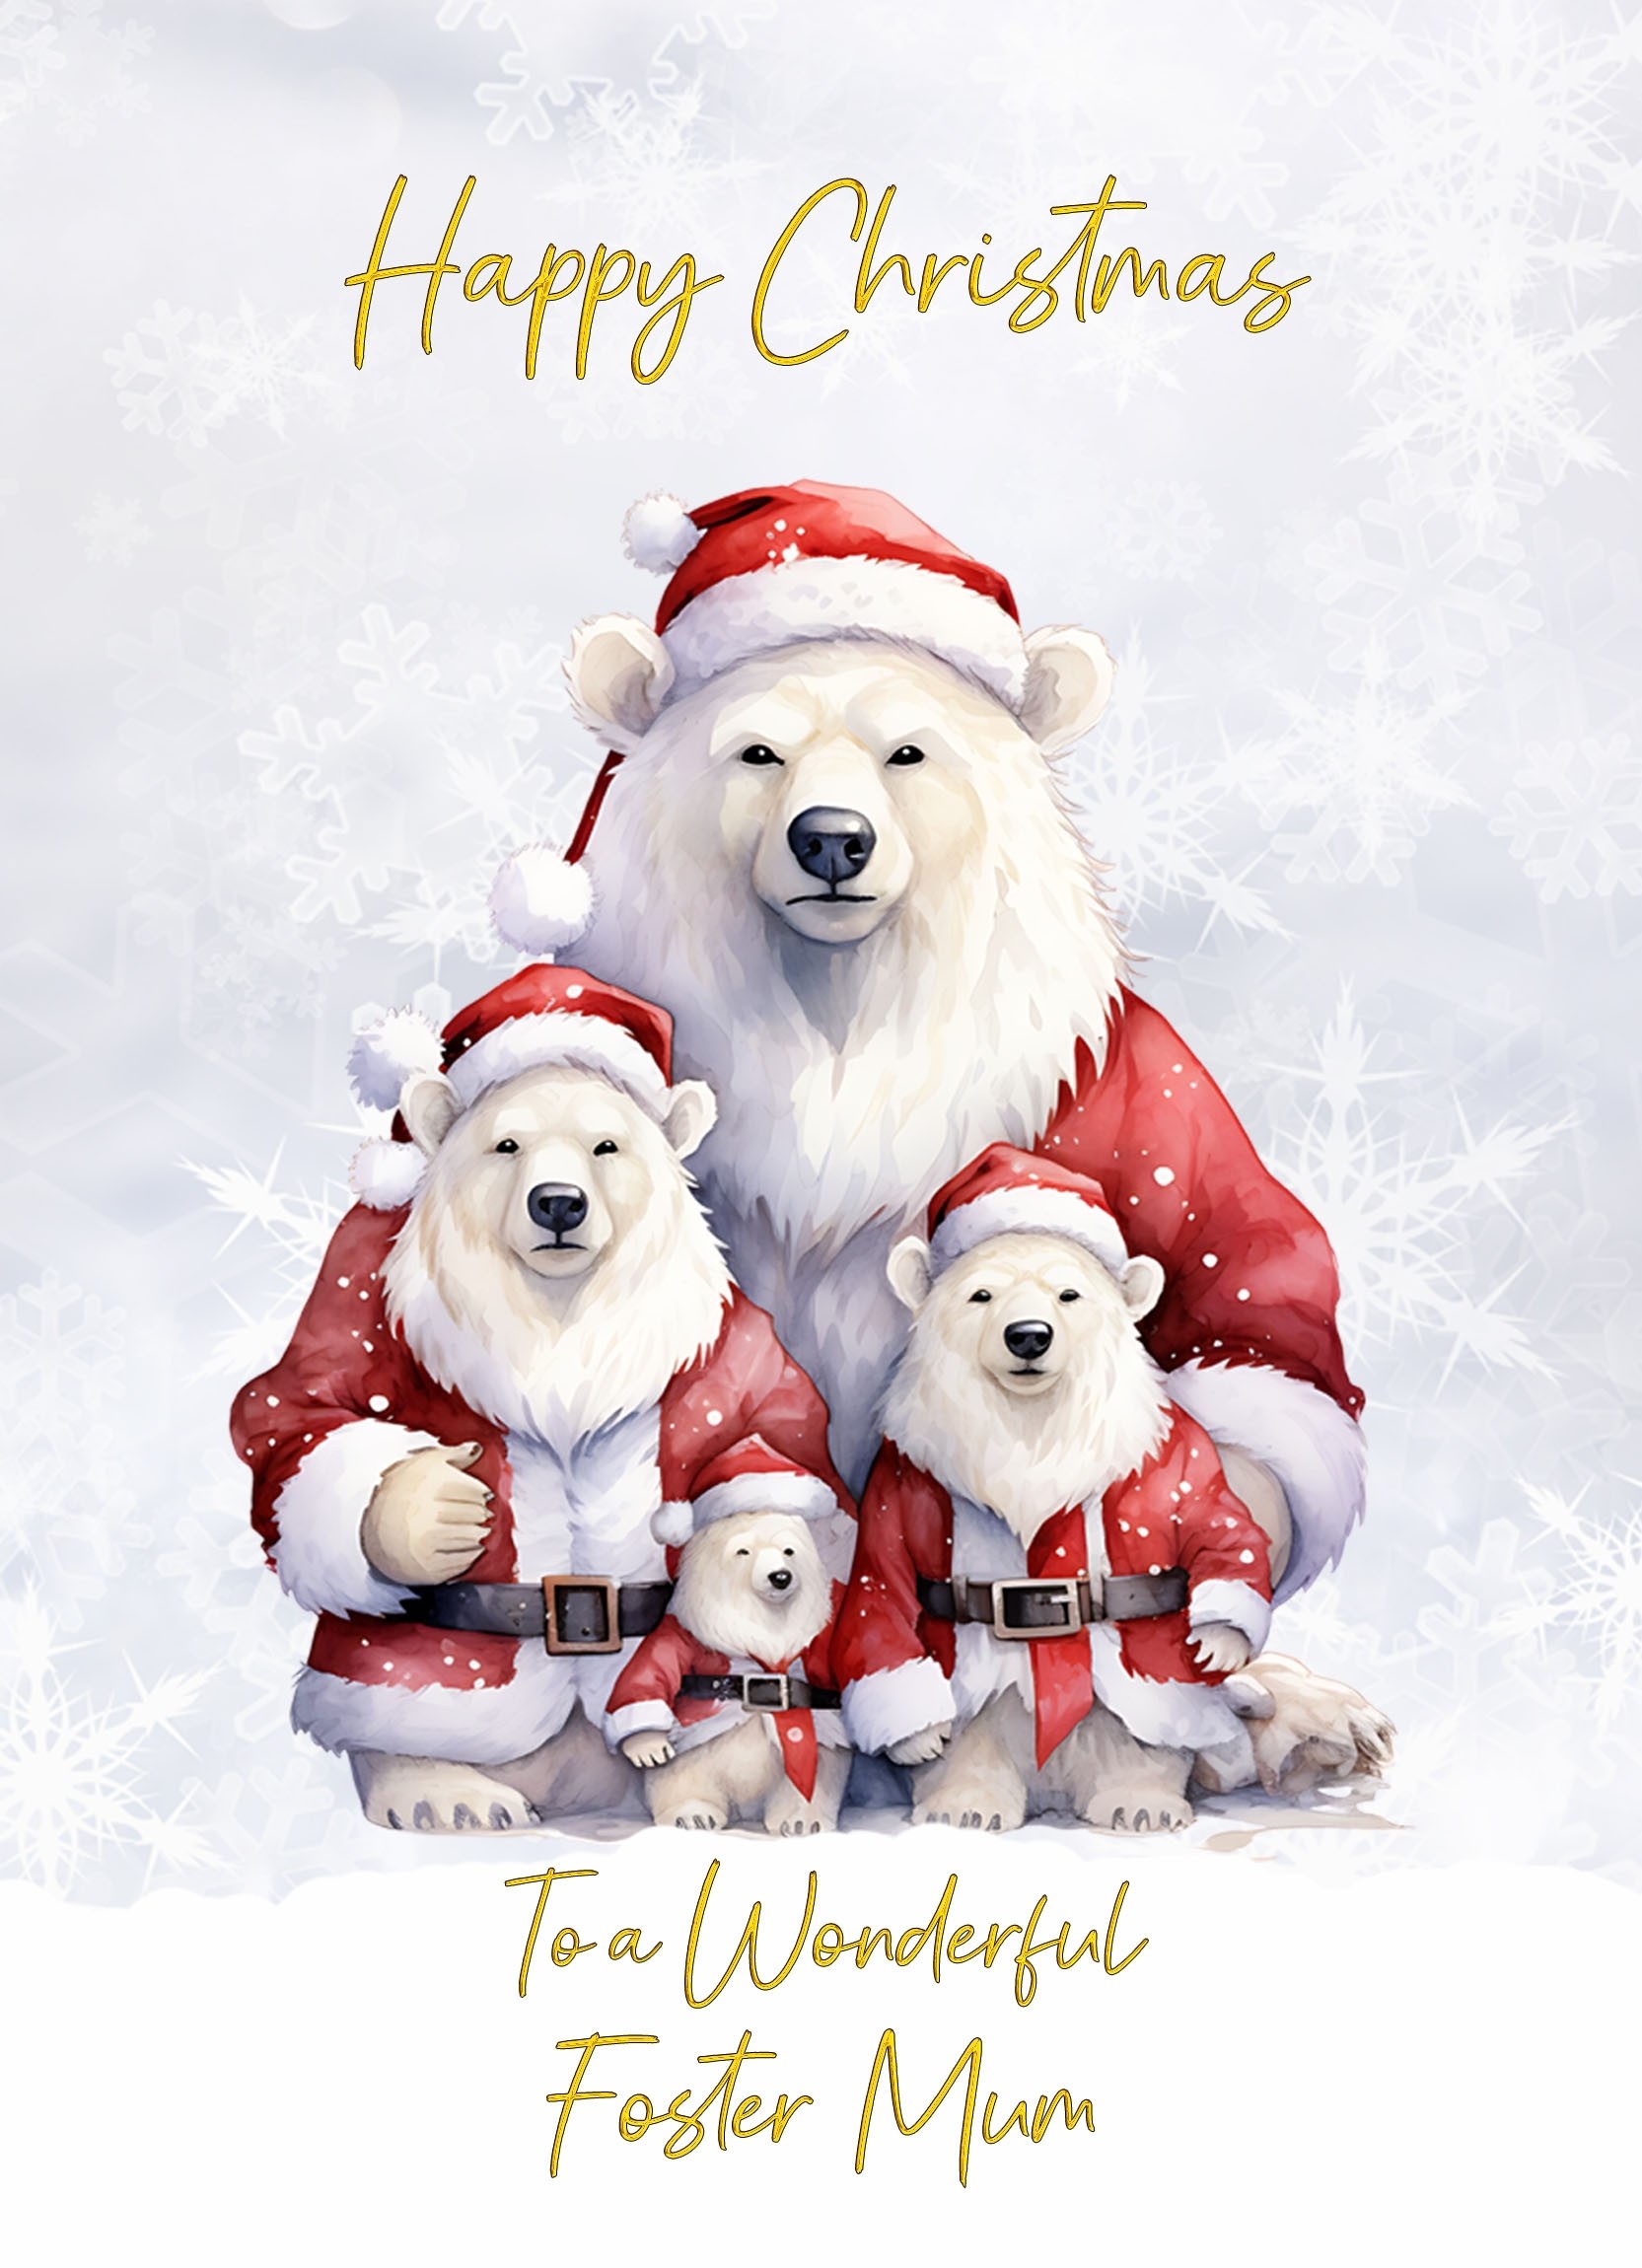 Christmas Card For Foster Mum (Polar Bear Family Art)